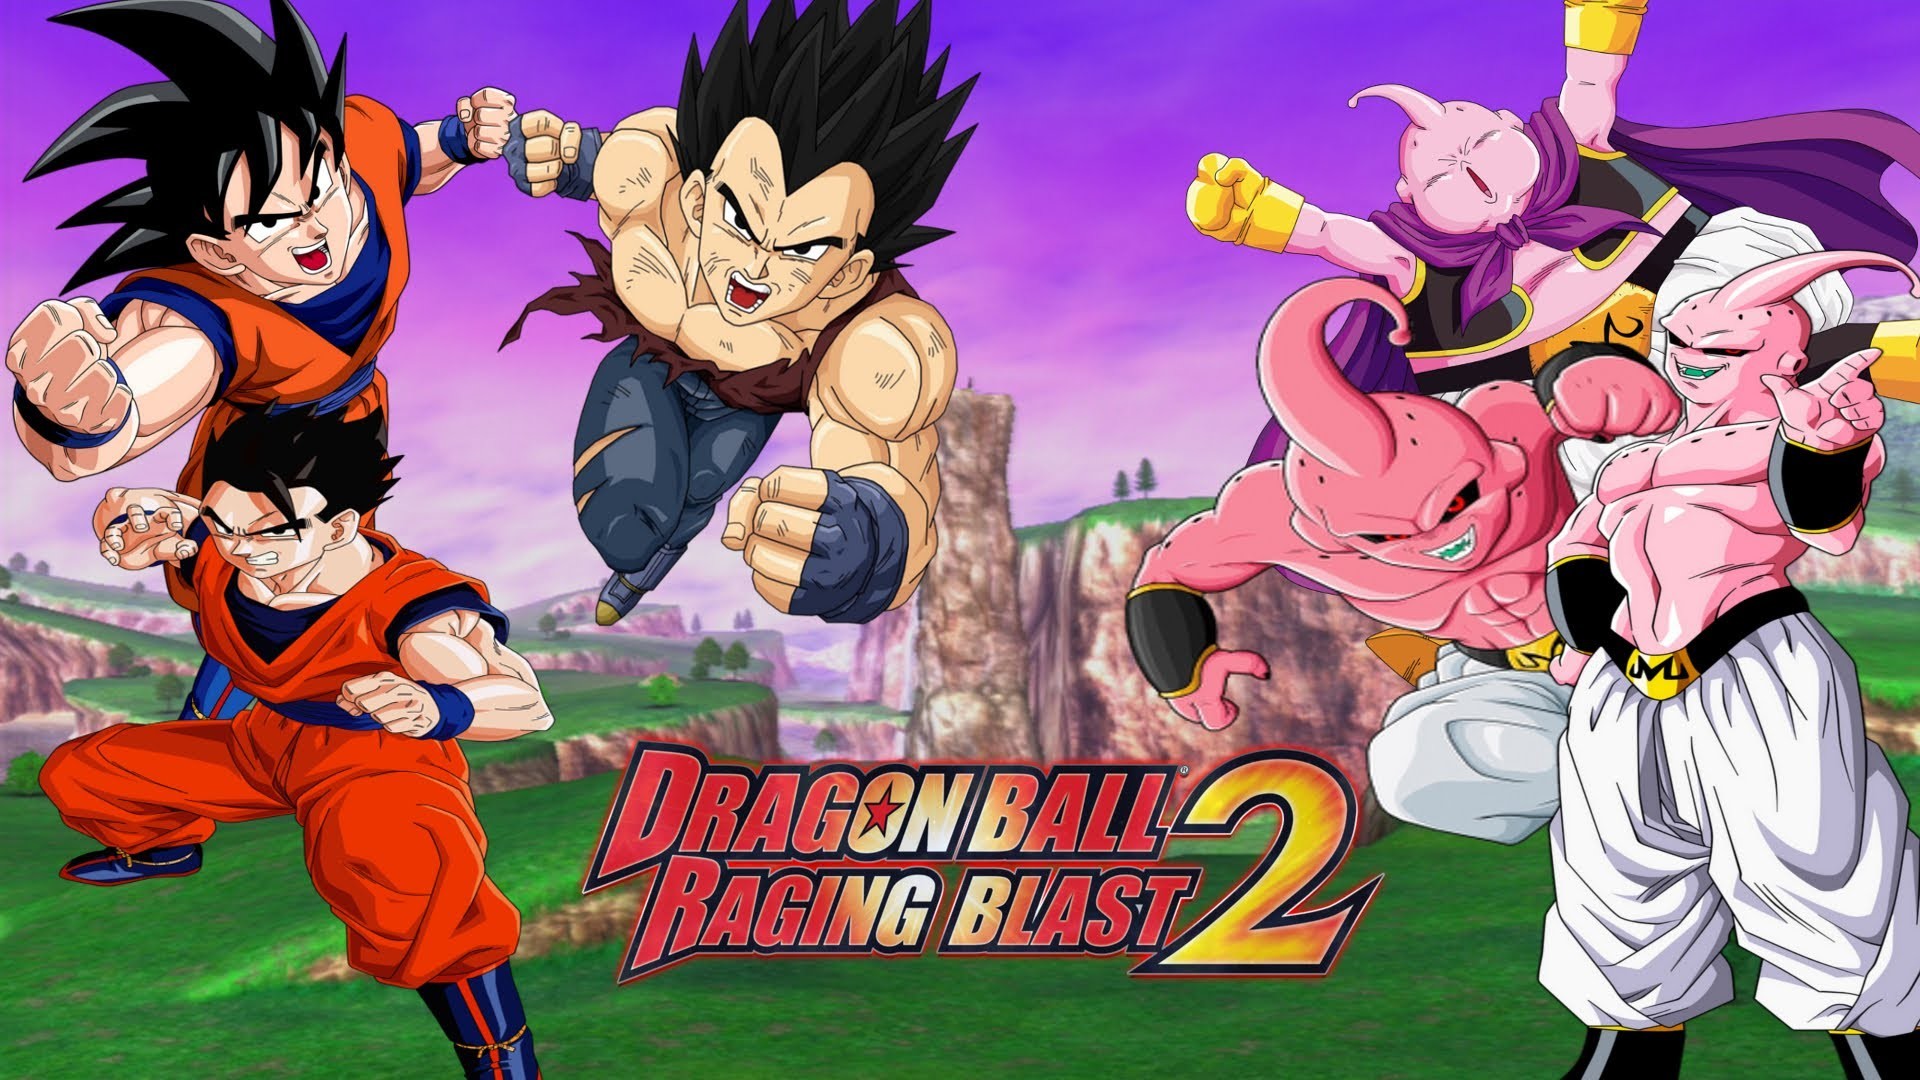 1920x1080 Dragon ball raging blast 2 Goku Vegeta and Gohan vs Majin buu super buu and  kid buu